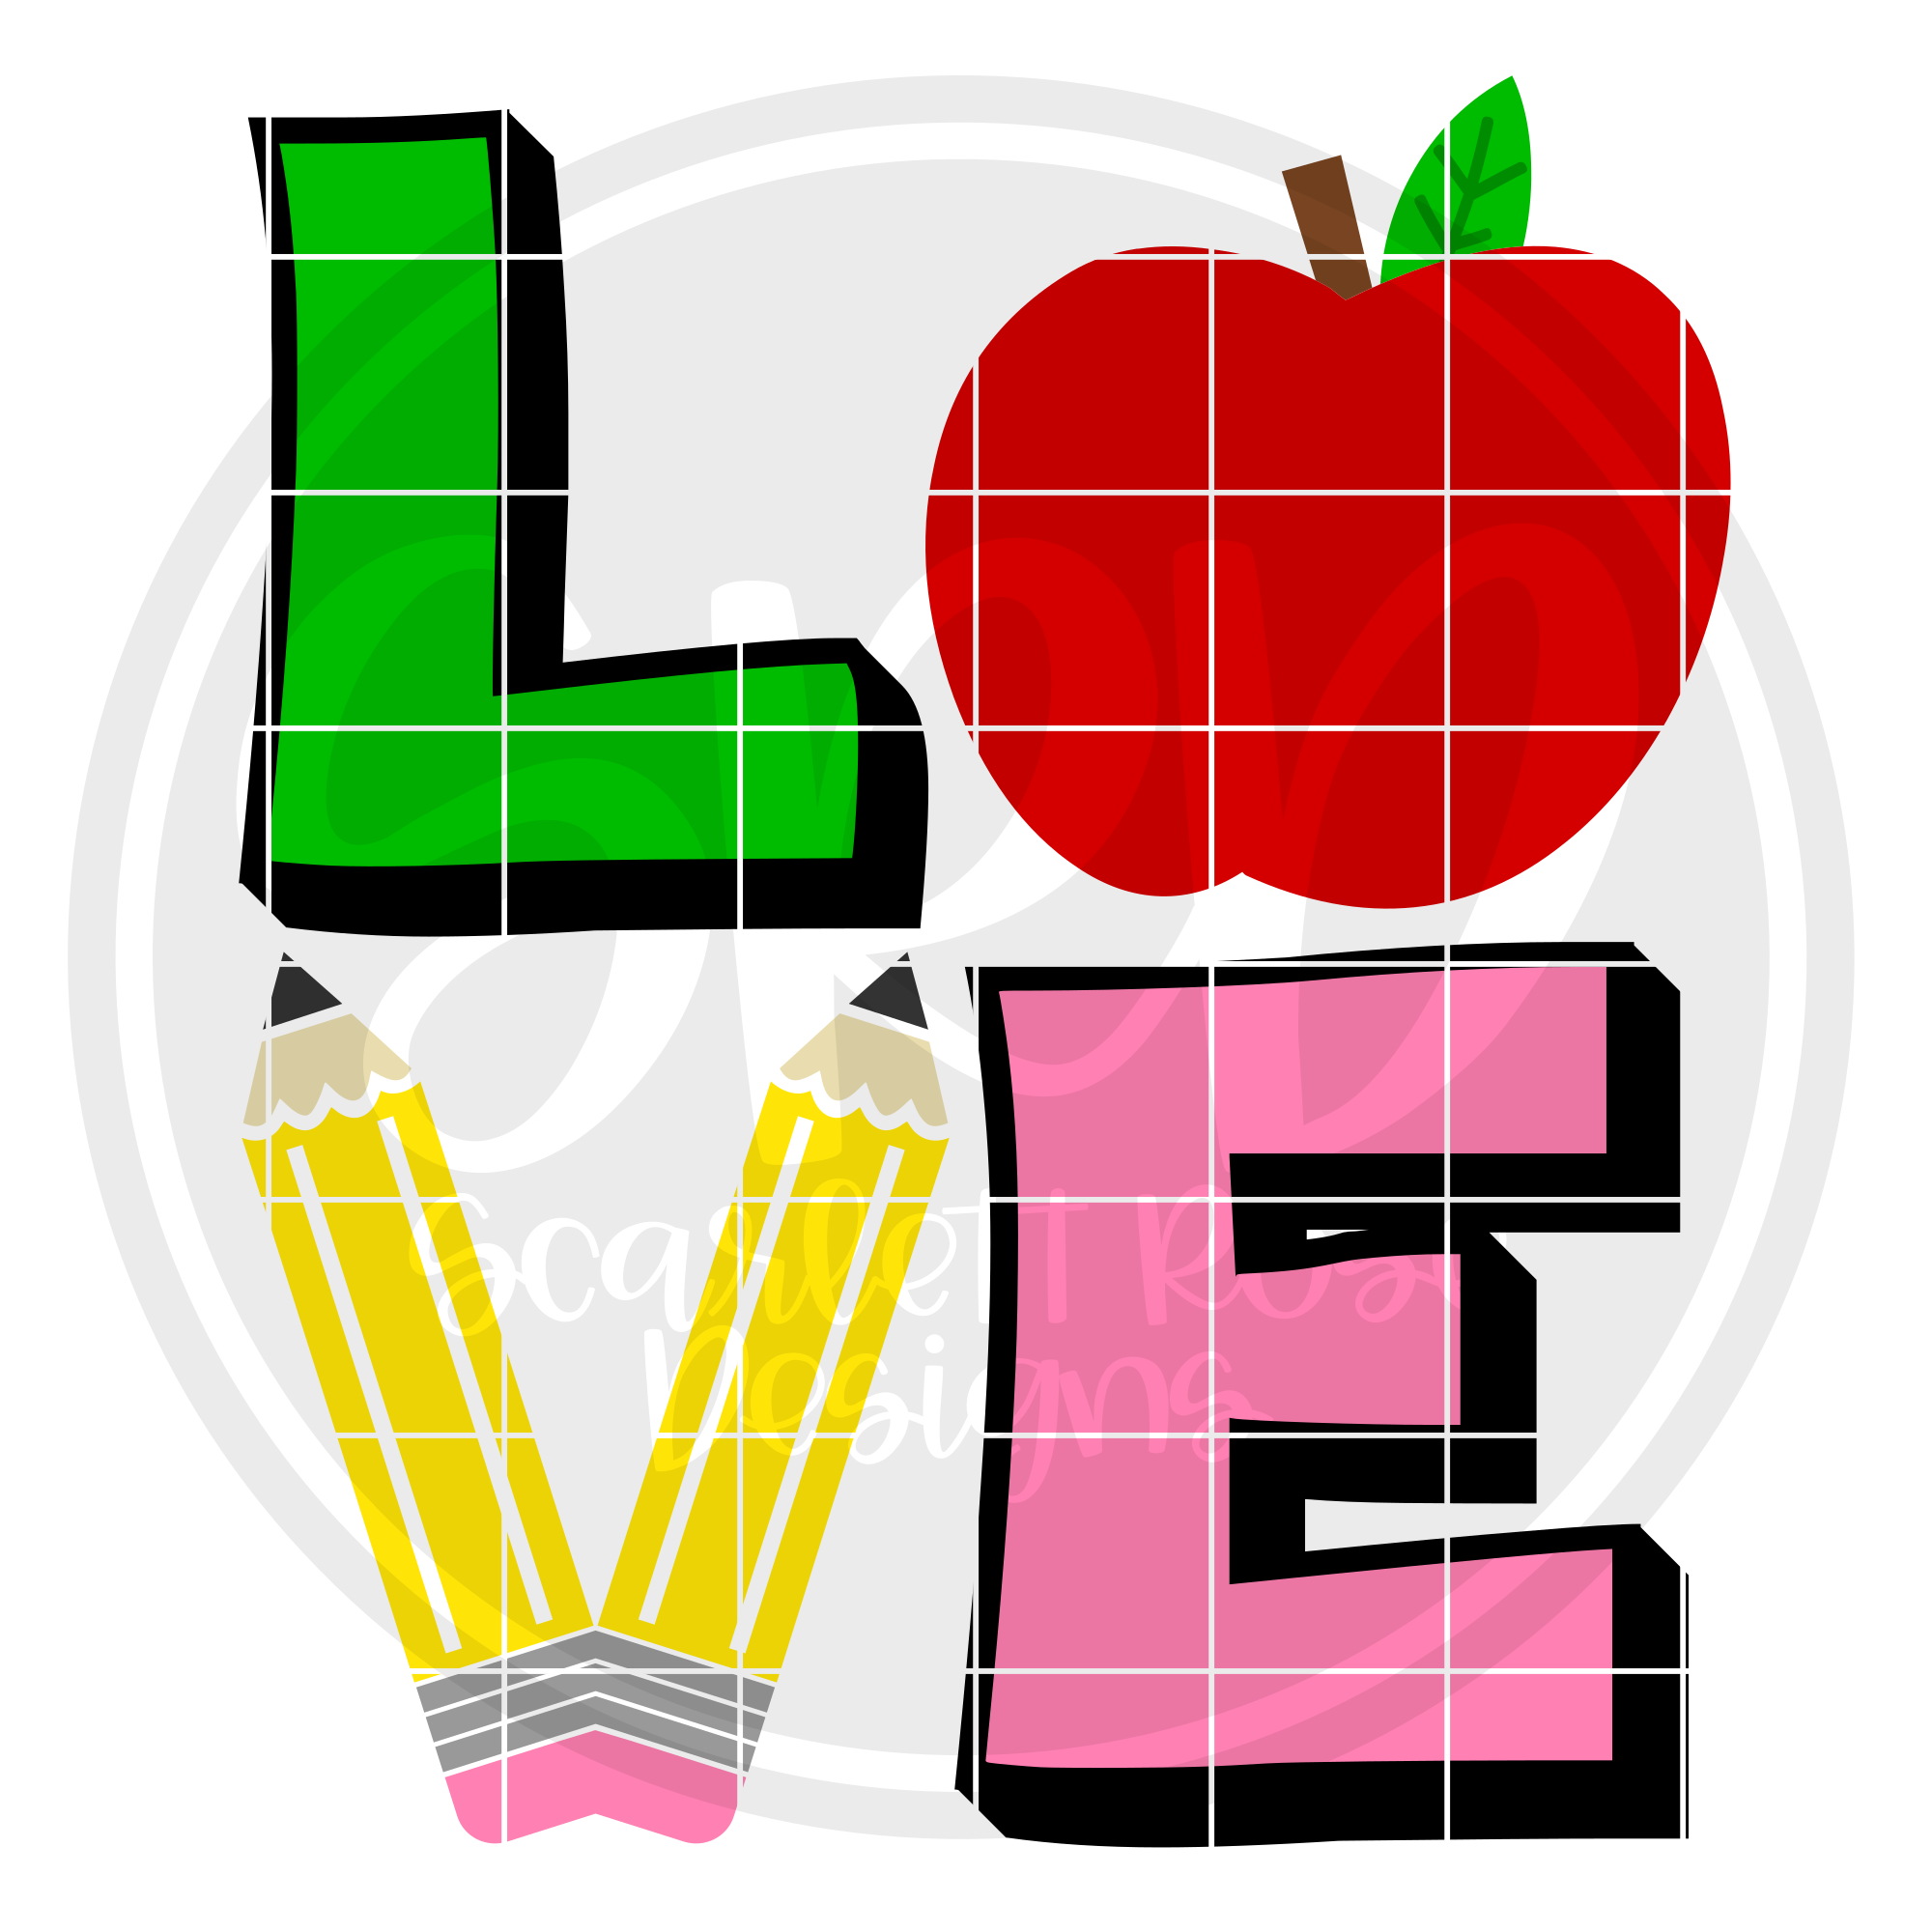 Free Free 227 Teacher Appreciation Teach Love Inspire Svg SVG PNG EPS DXF File